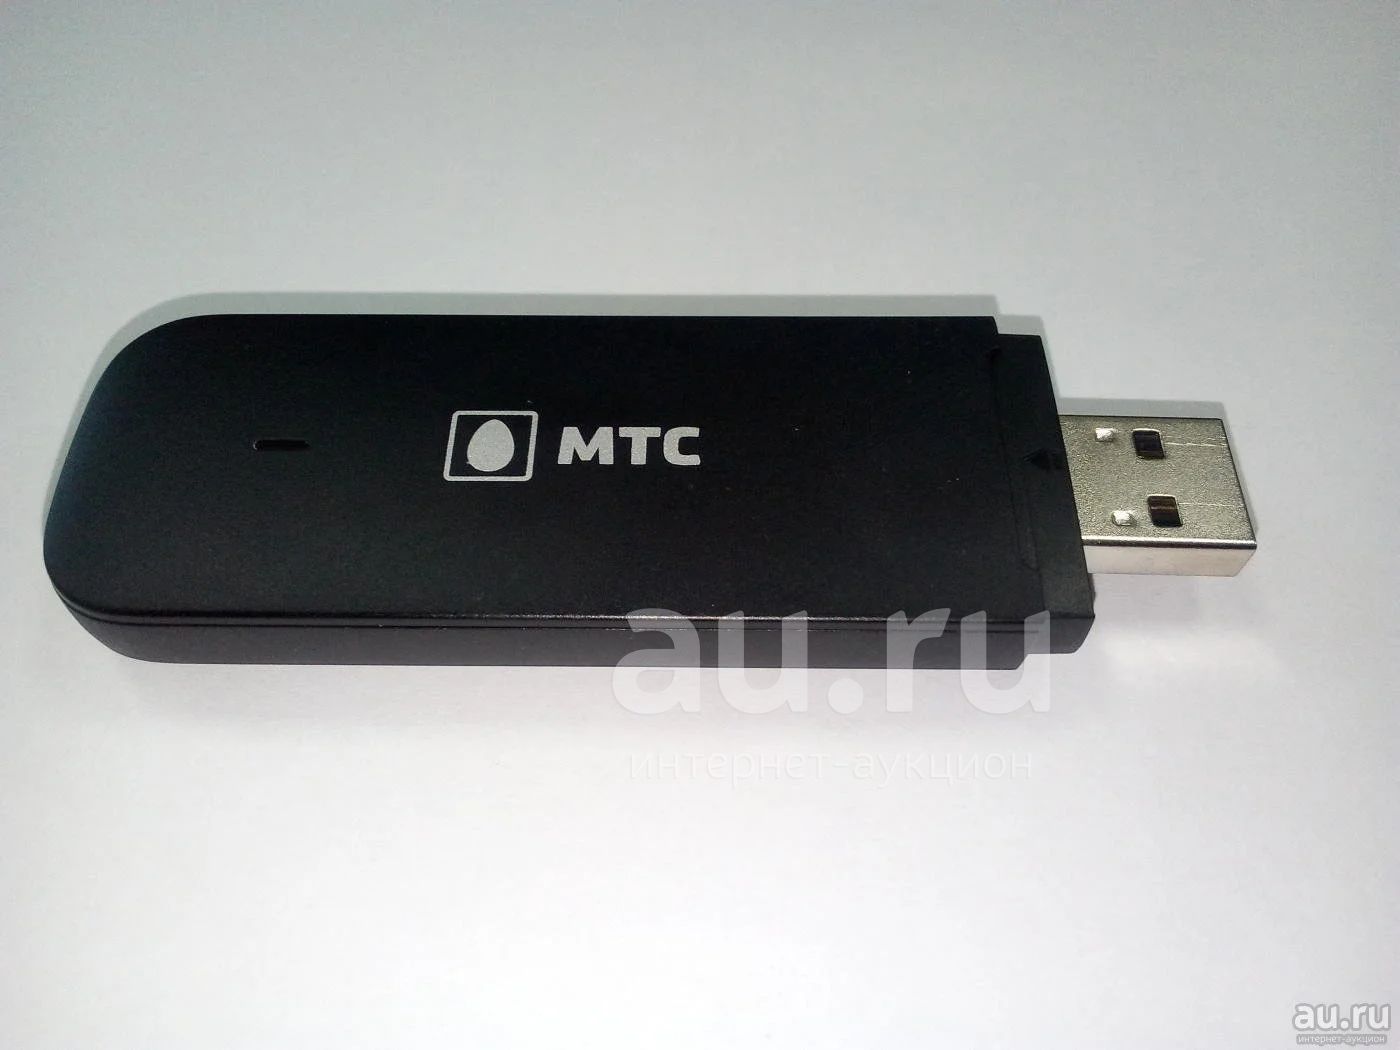 Usb модем 4g мтс. USB модем MTS 4g. 4g LTE модем МТС. Модем 4g LTE WIFI МТС. Модем МТС 8810ft.